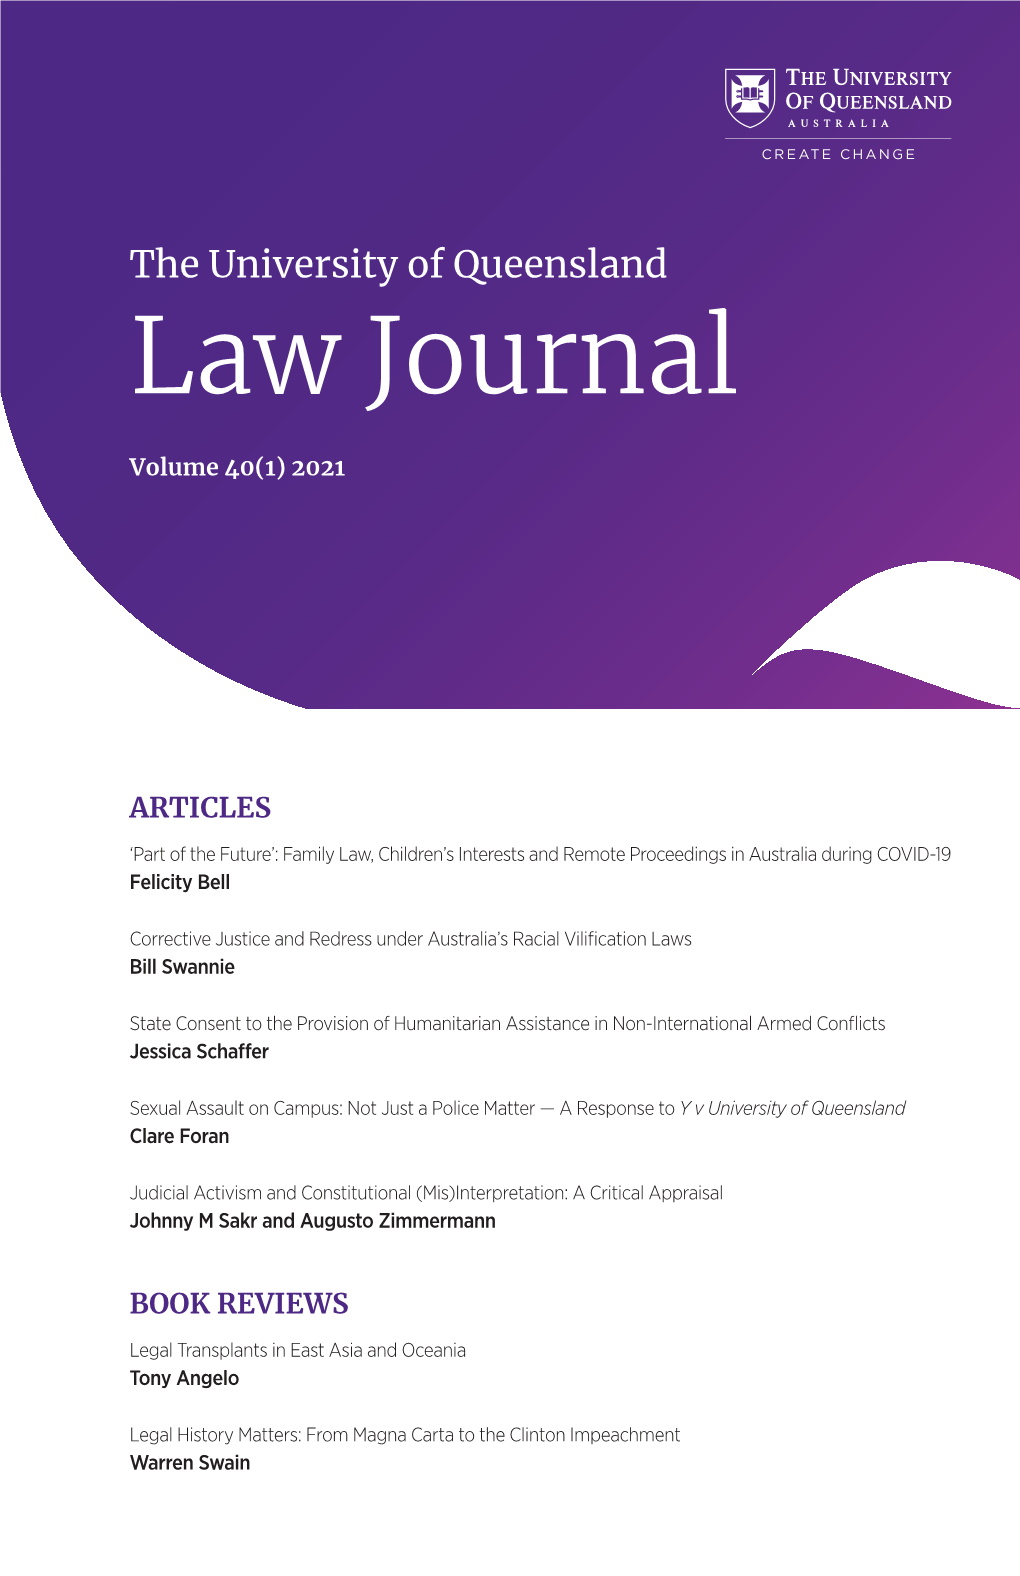 The University of Queensland Law Journal